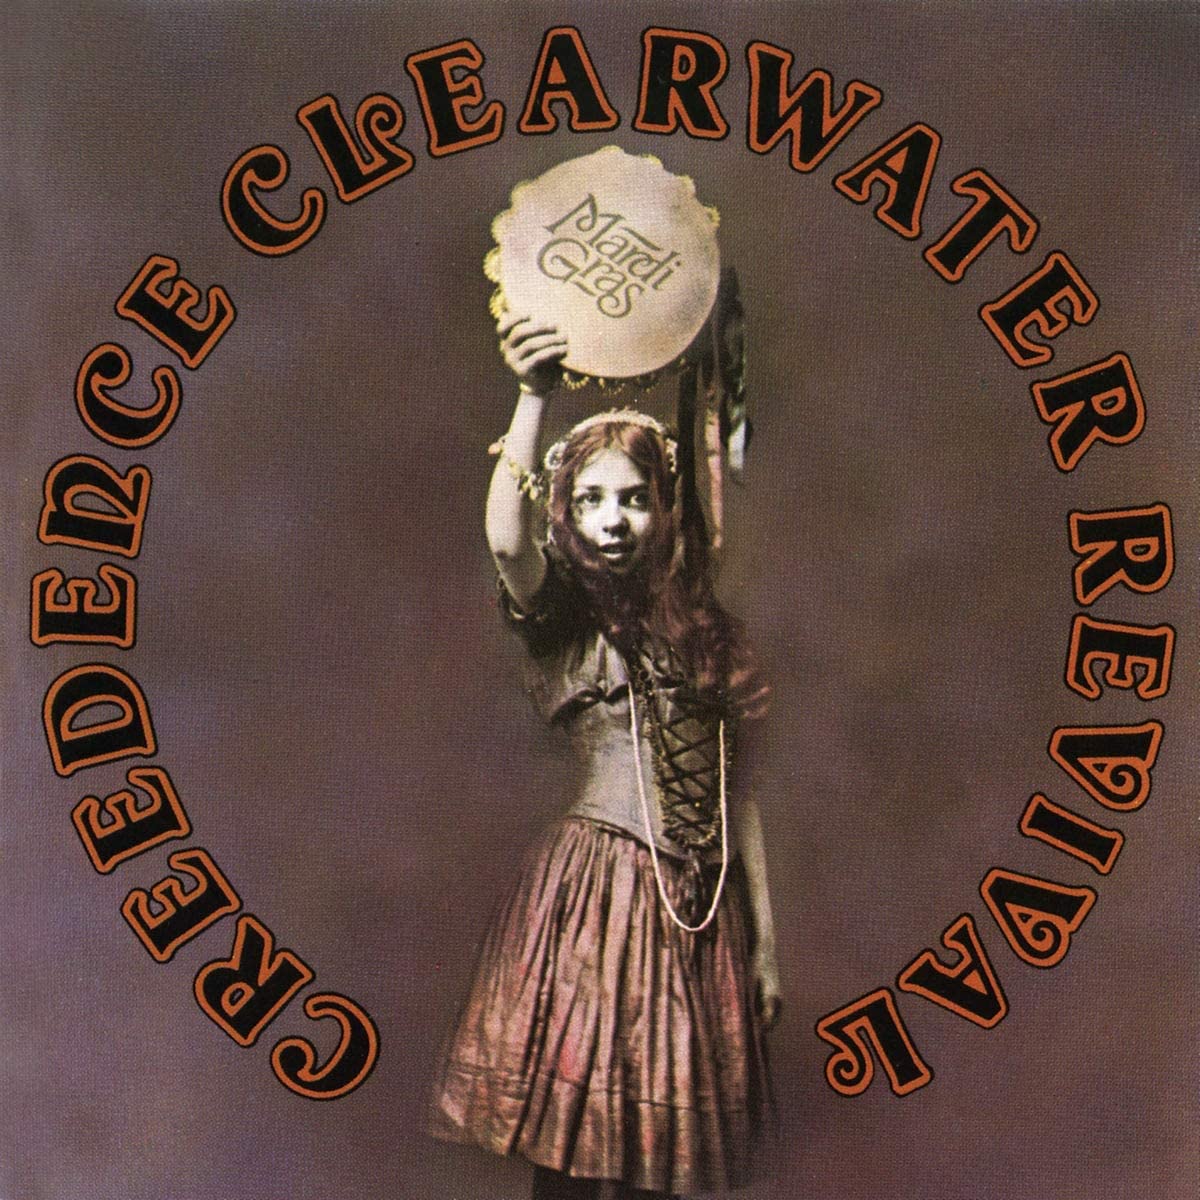 Creedence Clearwater Revival/Mardi Gras (Half-Speed Master) [LP]